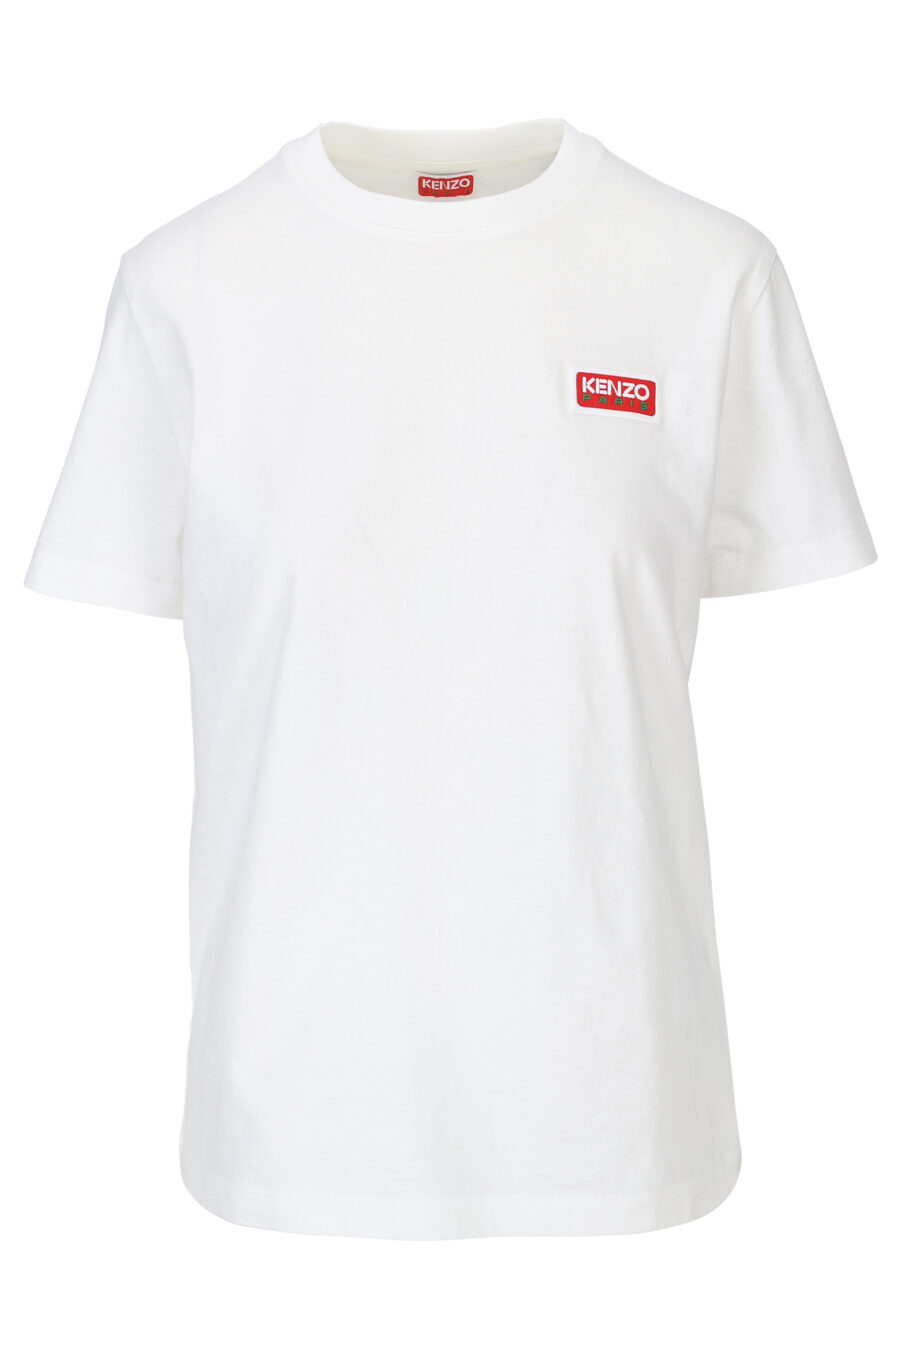 T-shirt blanc oversize avec logo "kenzo paris" - 3612230520875